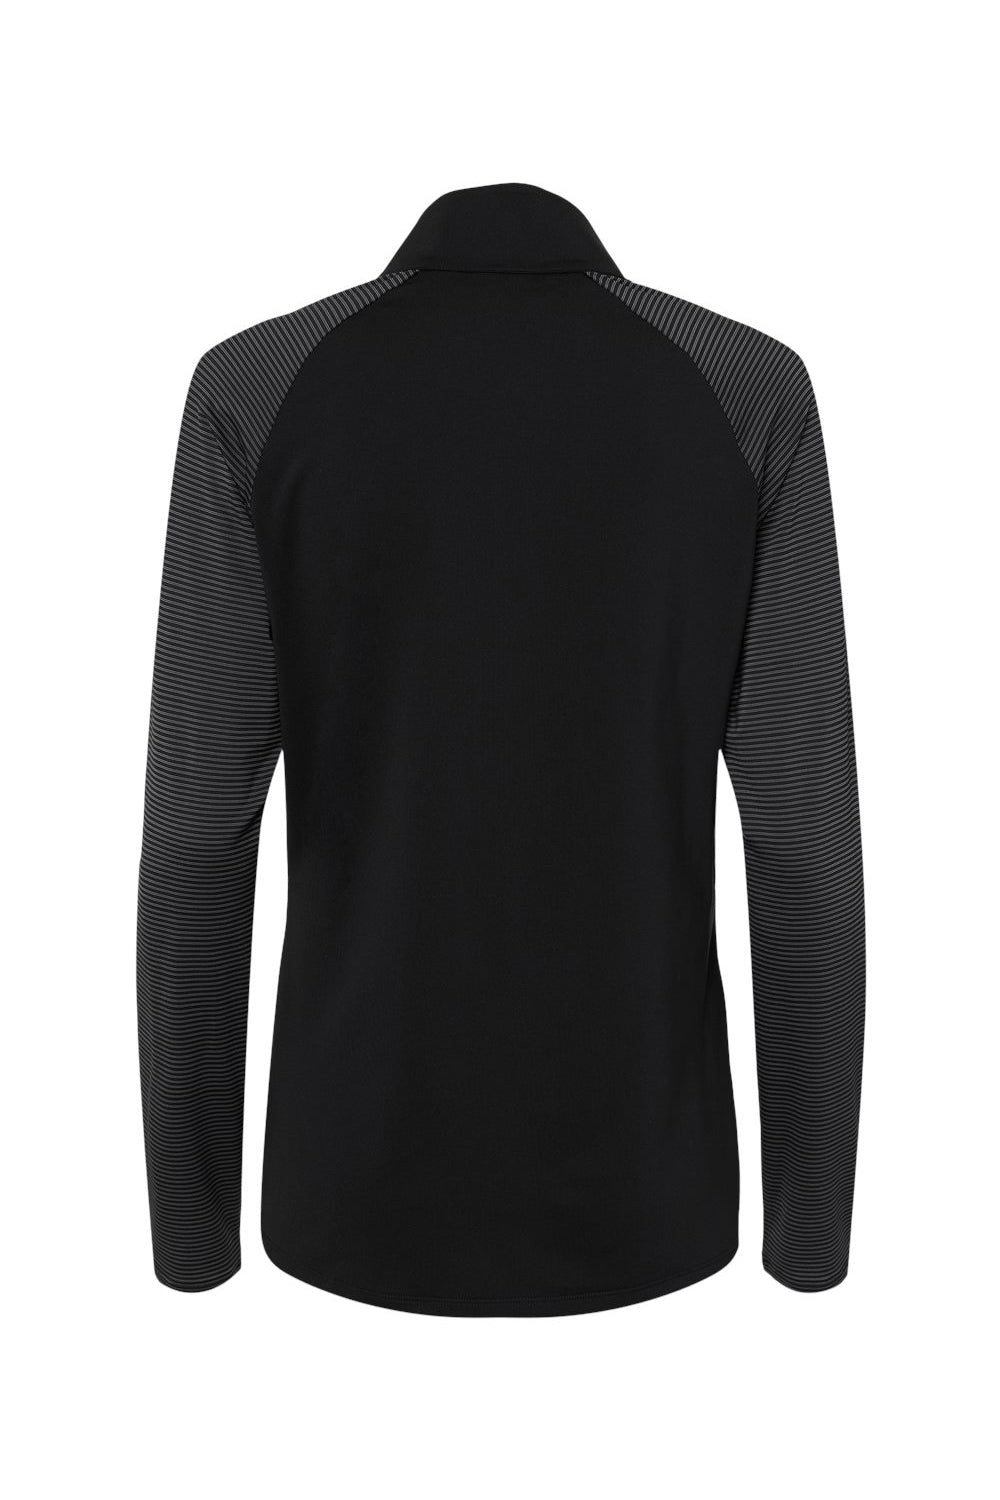 Adidas A521 Womens Stripe Block Moisture Wicking 1/4 Zip Sweatshirt Black Flat Back